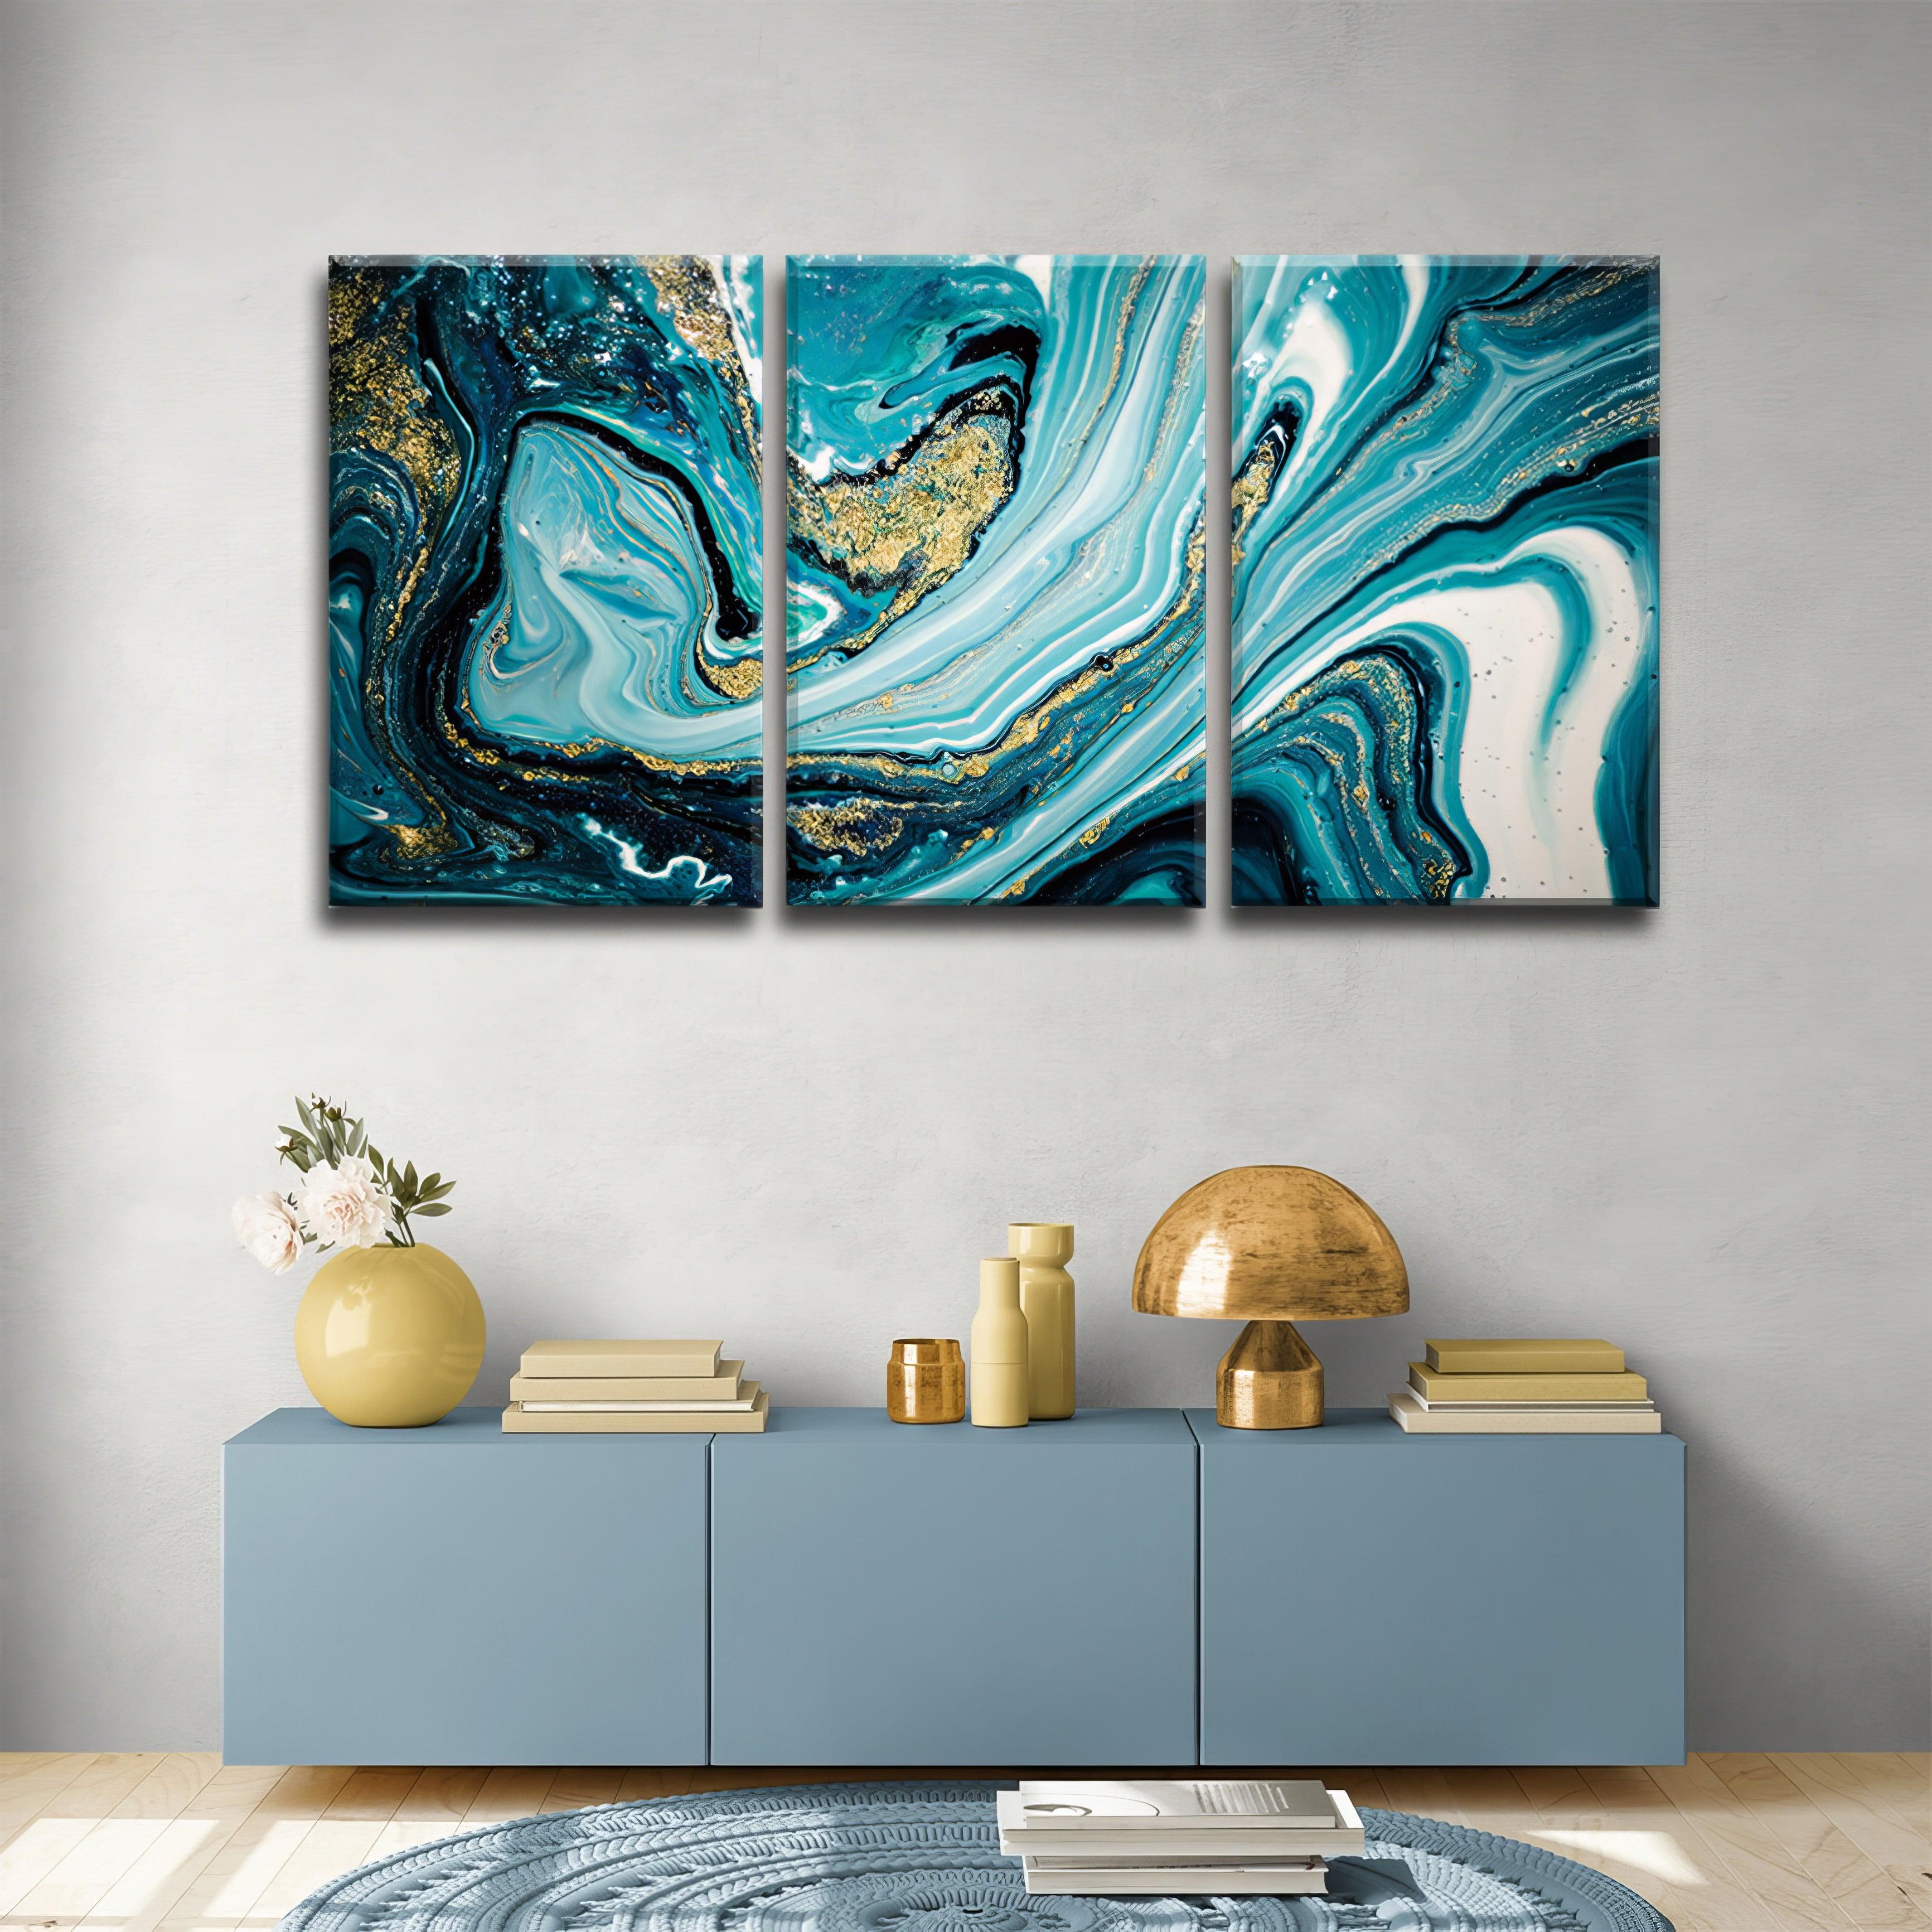 Fluid Art Swirls - Blue and Gold - 3Panel.